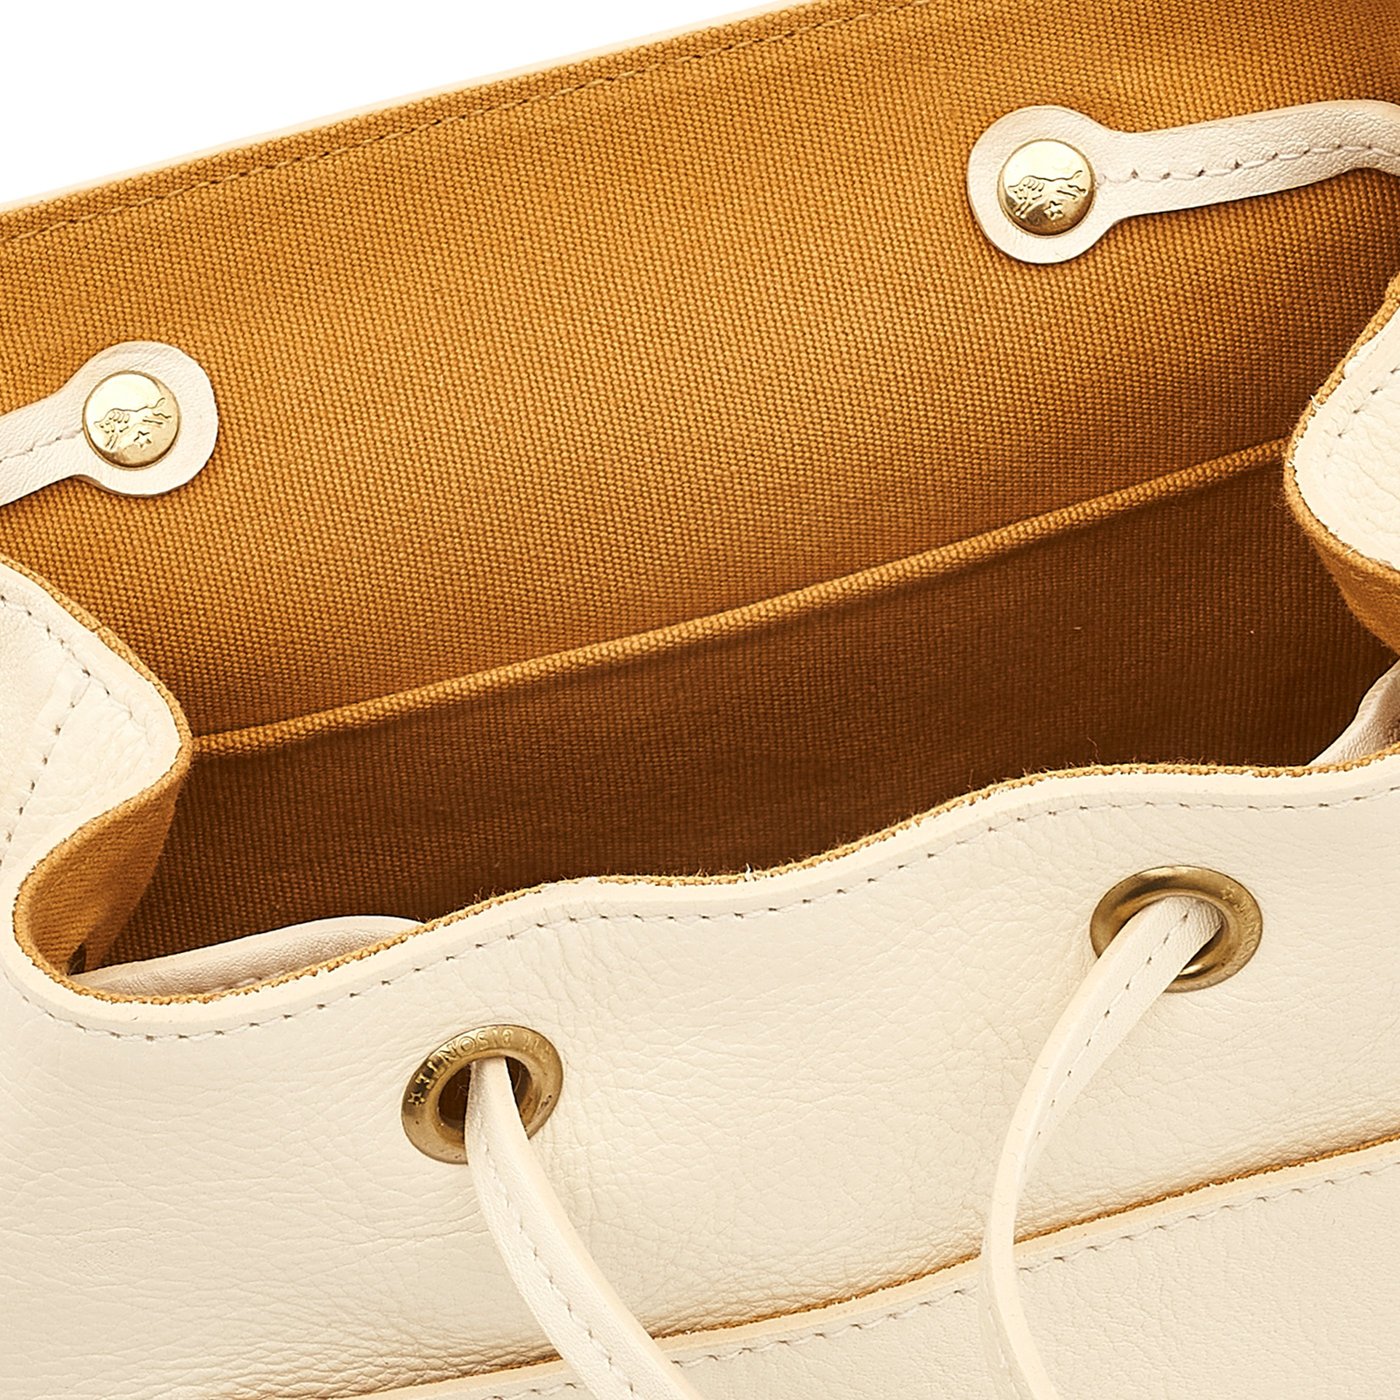 Mezzomonte | Women's backpack in leather color milk – Il Bisonte